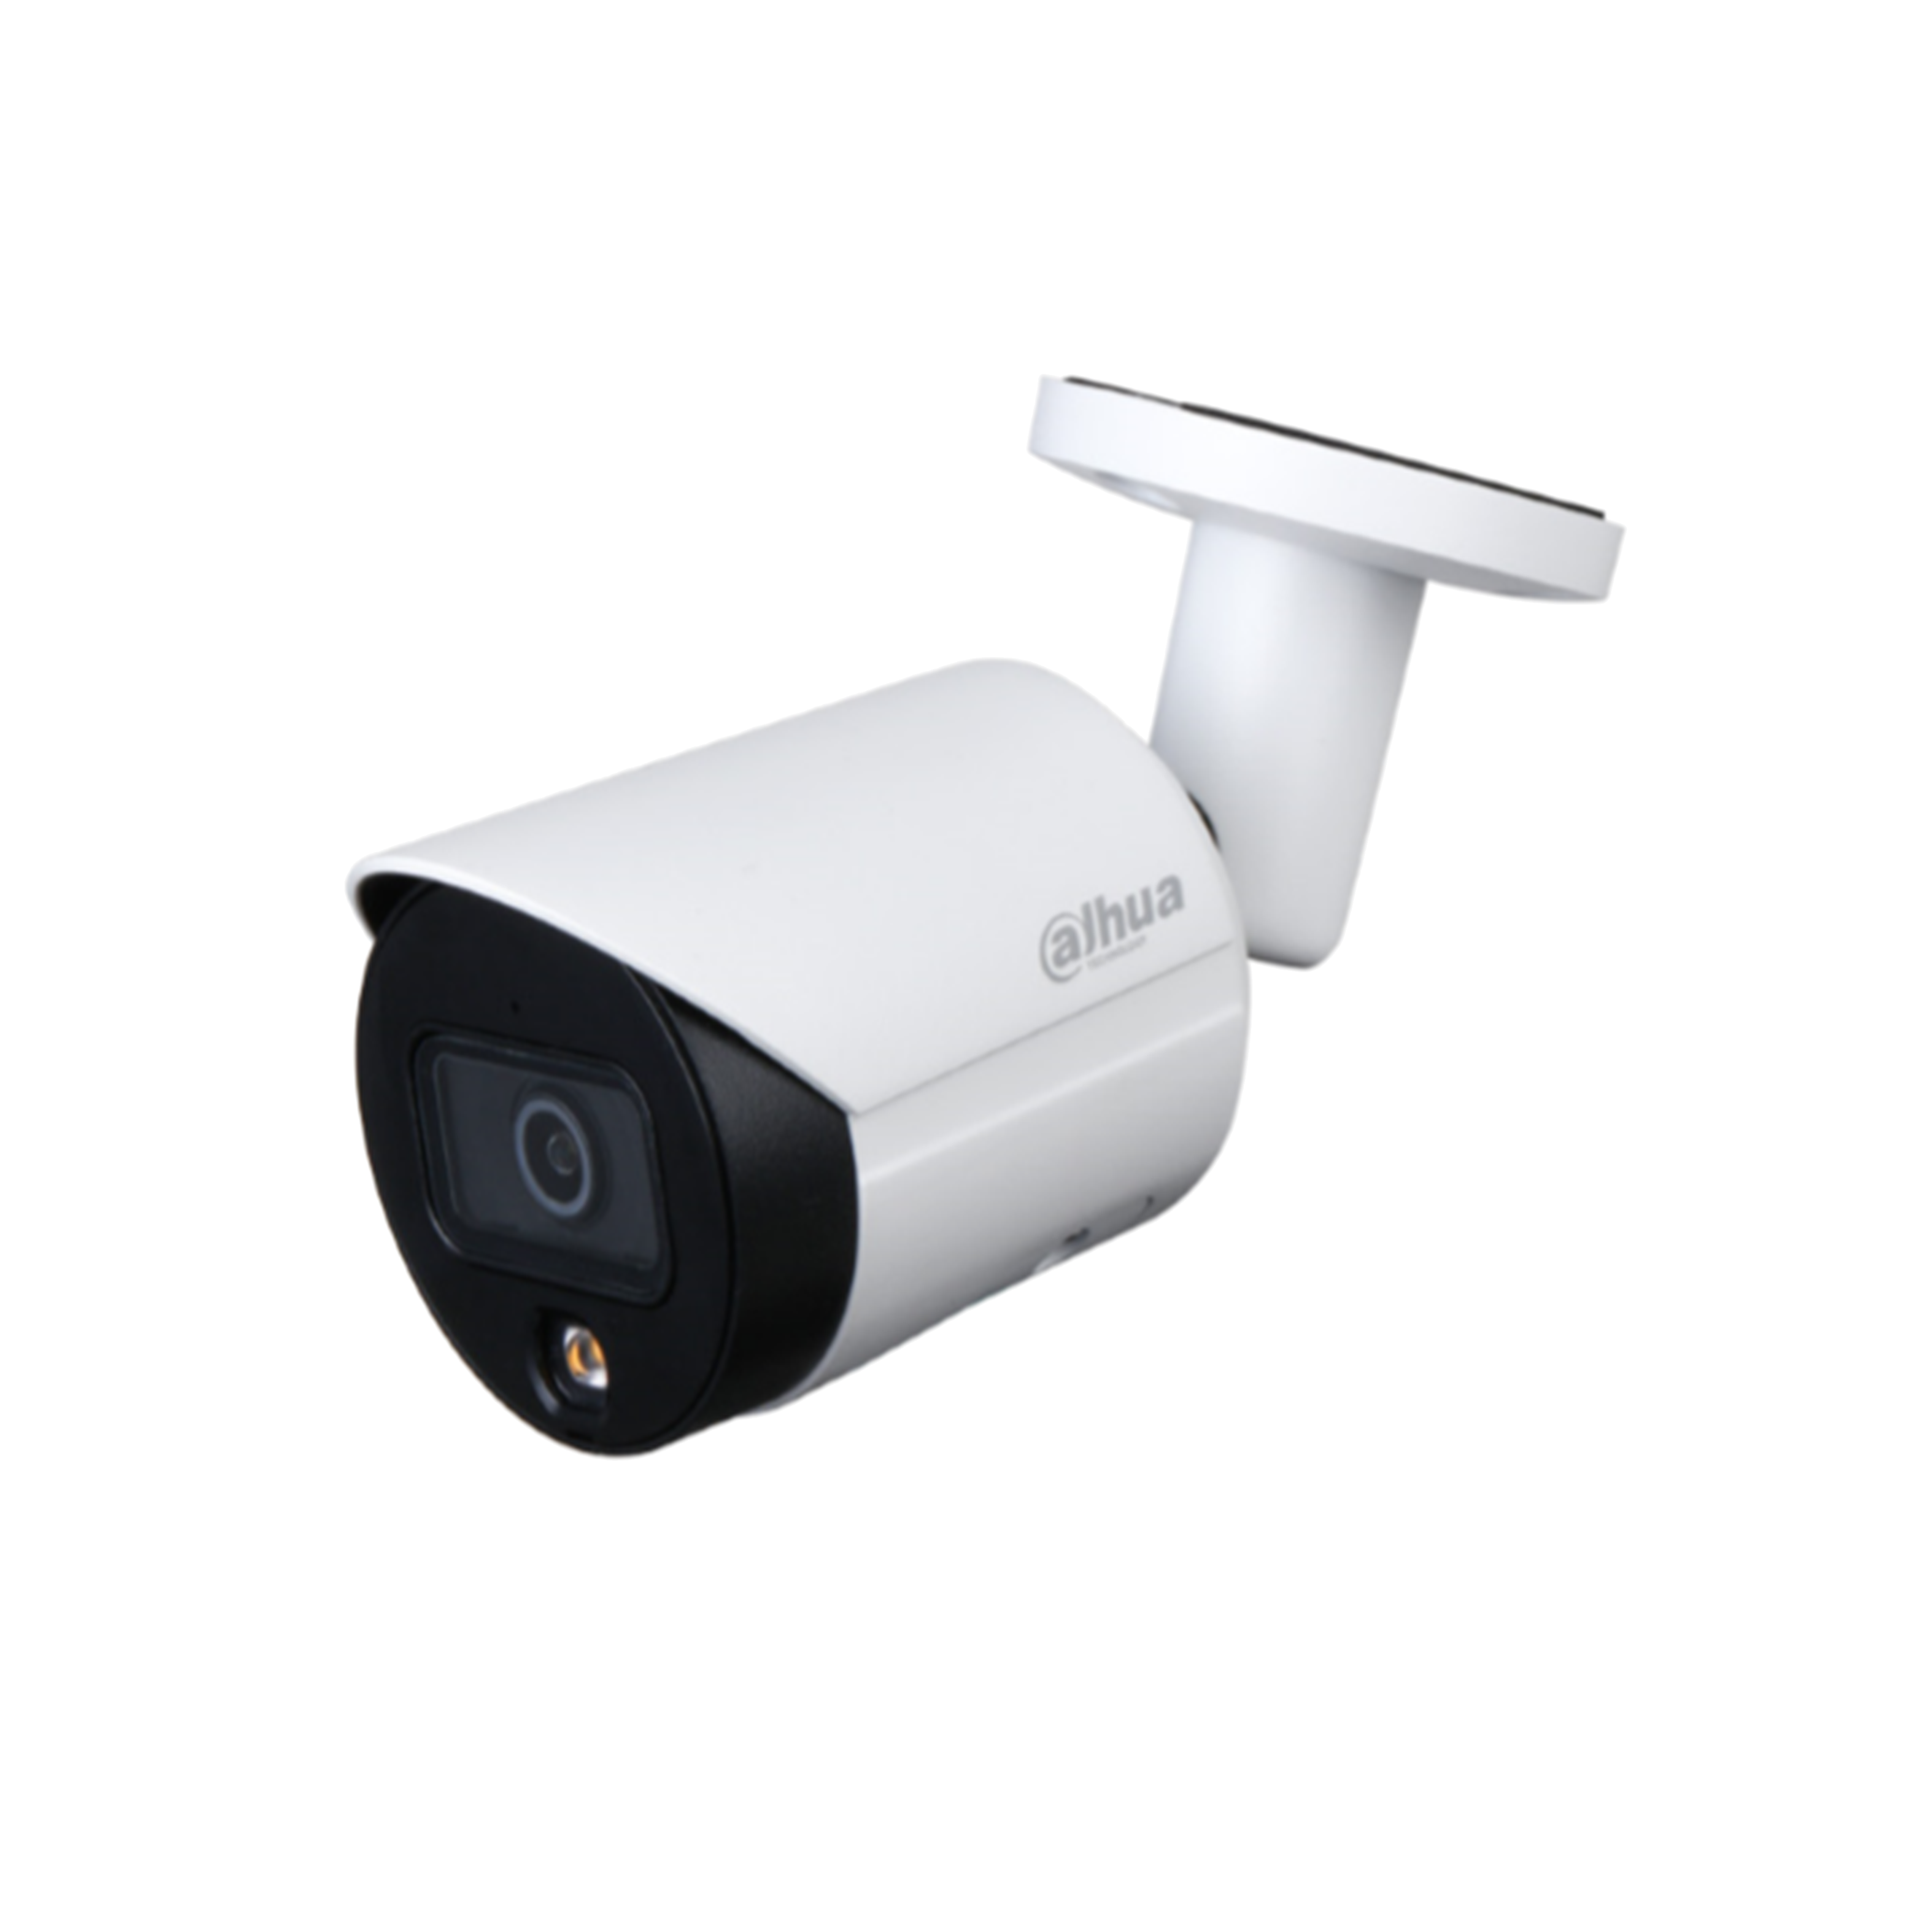 DAHUA IPC-HFW2439S-SA-LED-S2 4MP Lite Full-color Fixed-focal Bullet Network Camera